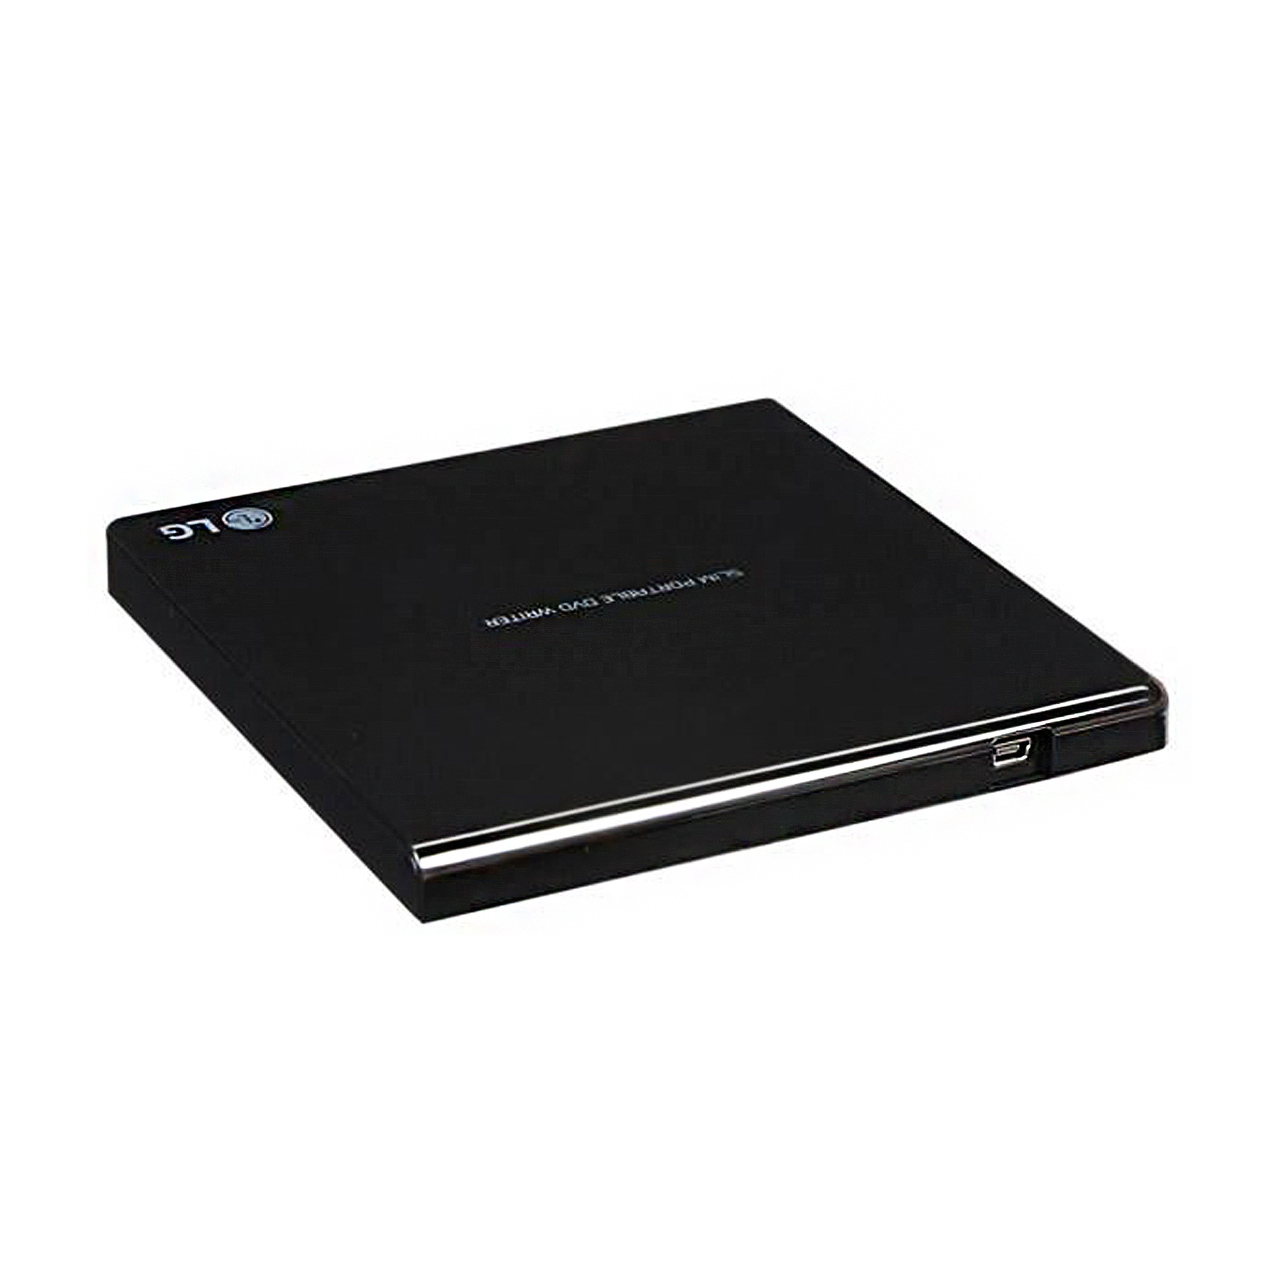 LG GP65NB60 Ultra Slim Portable External DVD Writer Drive